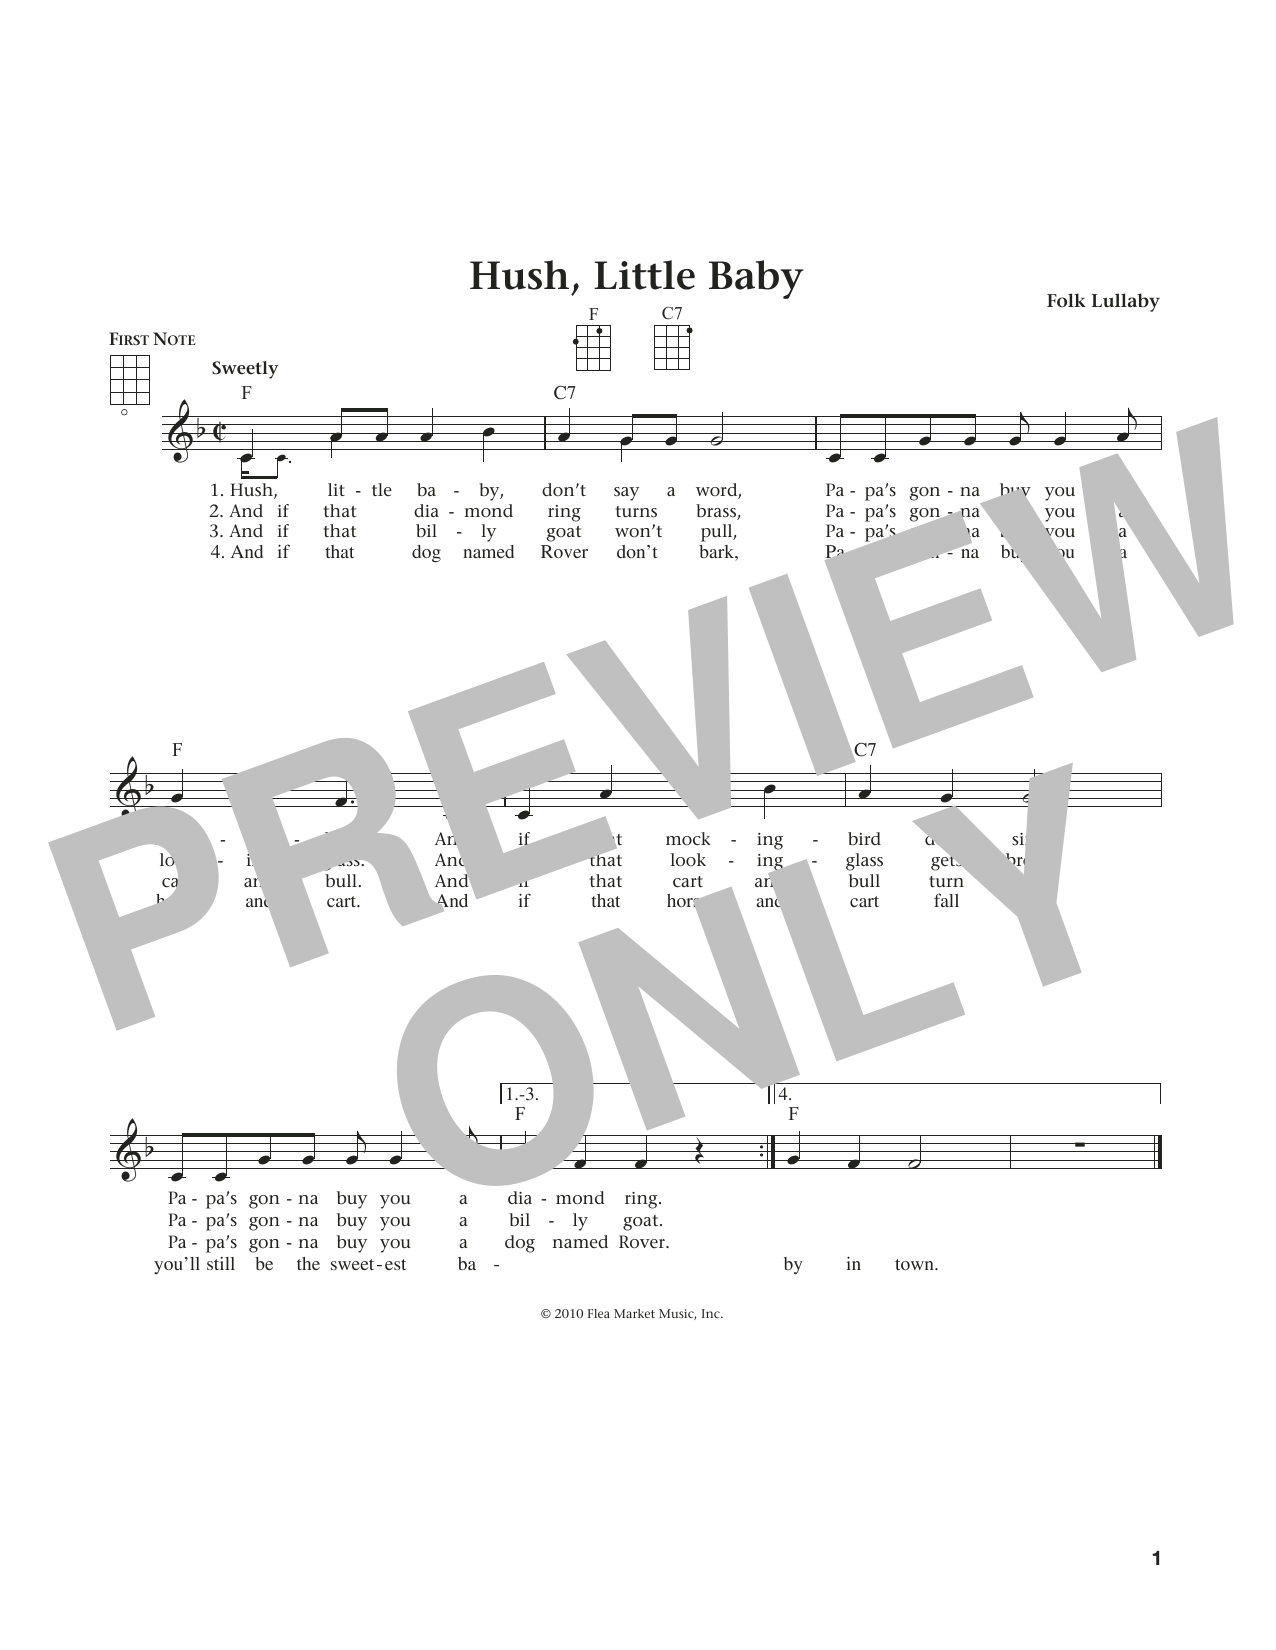 Carolina Folk Lullaby Hush, Little Baby (from The Daily Ukulele) (arr. Liz and Jim Beloff) Sheet Music Notes & Chords for Ukulele - Download or Print PDF